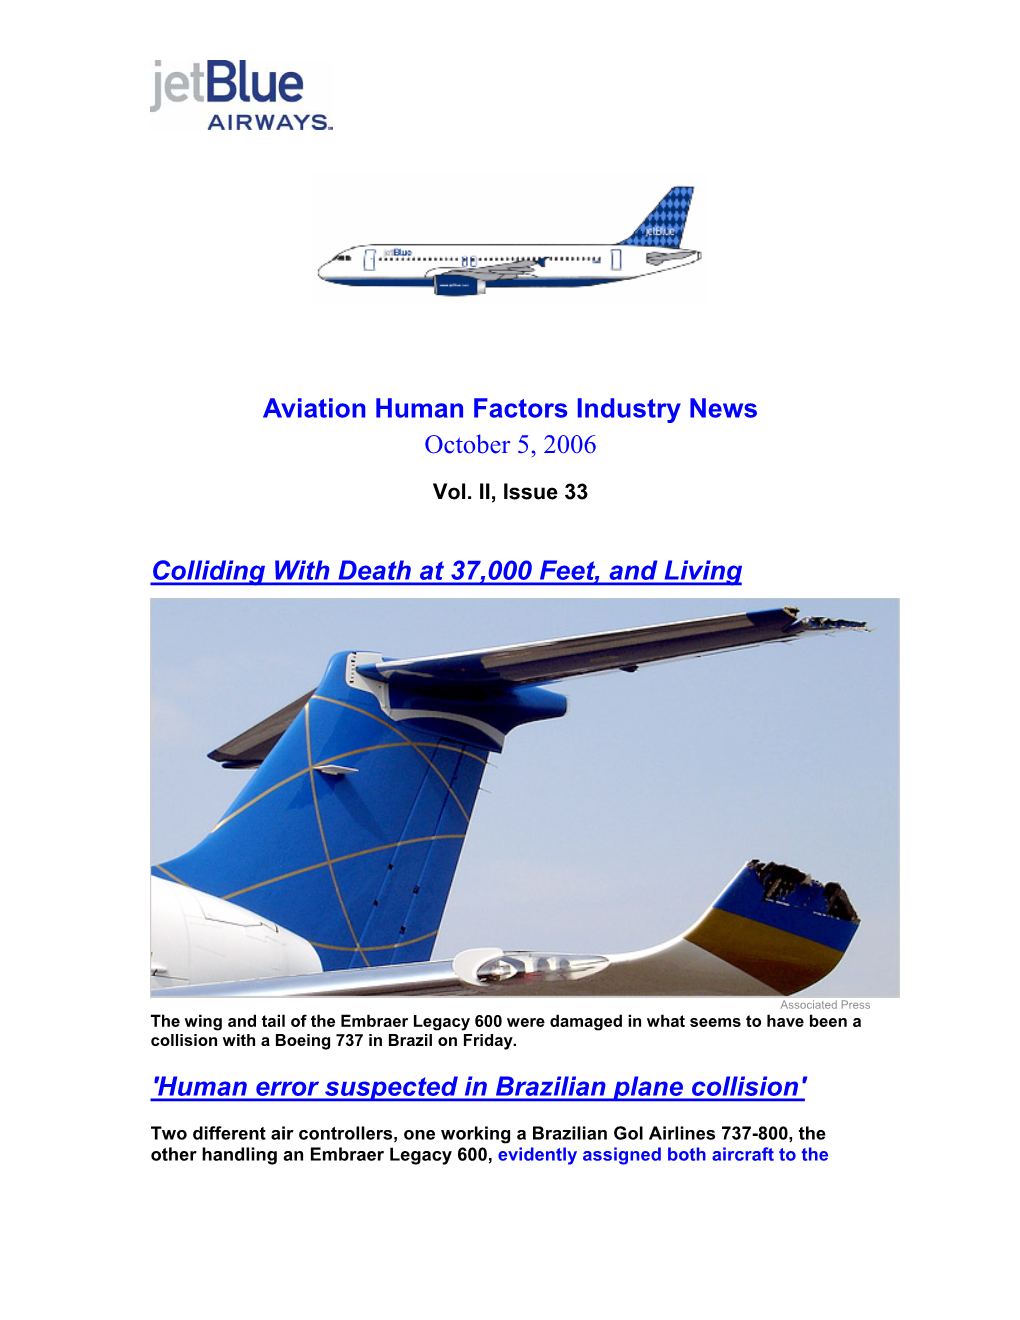 Aviation Human Factors Industry News October 5, 2006 Colliding